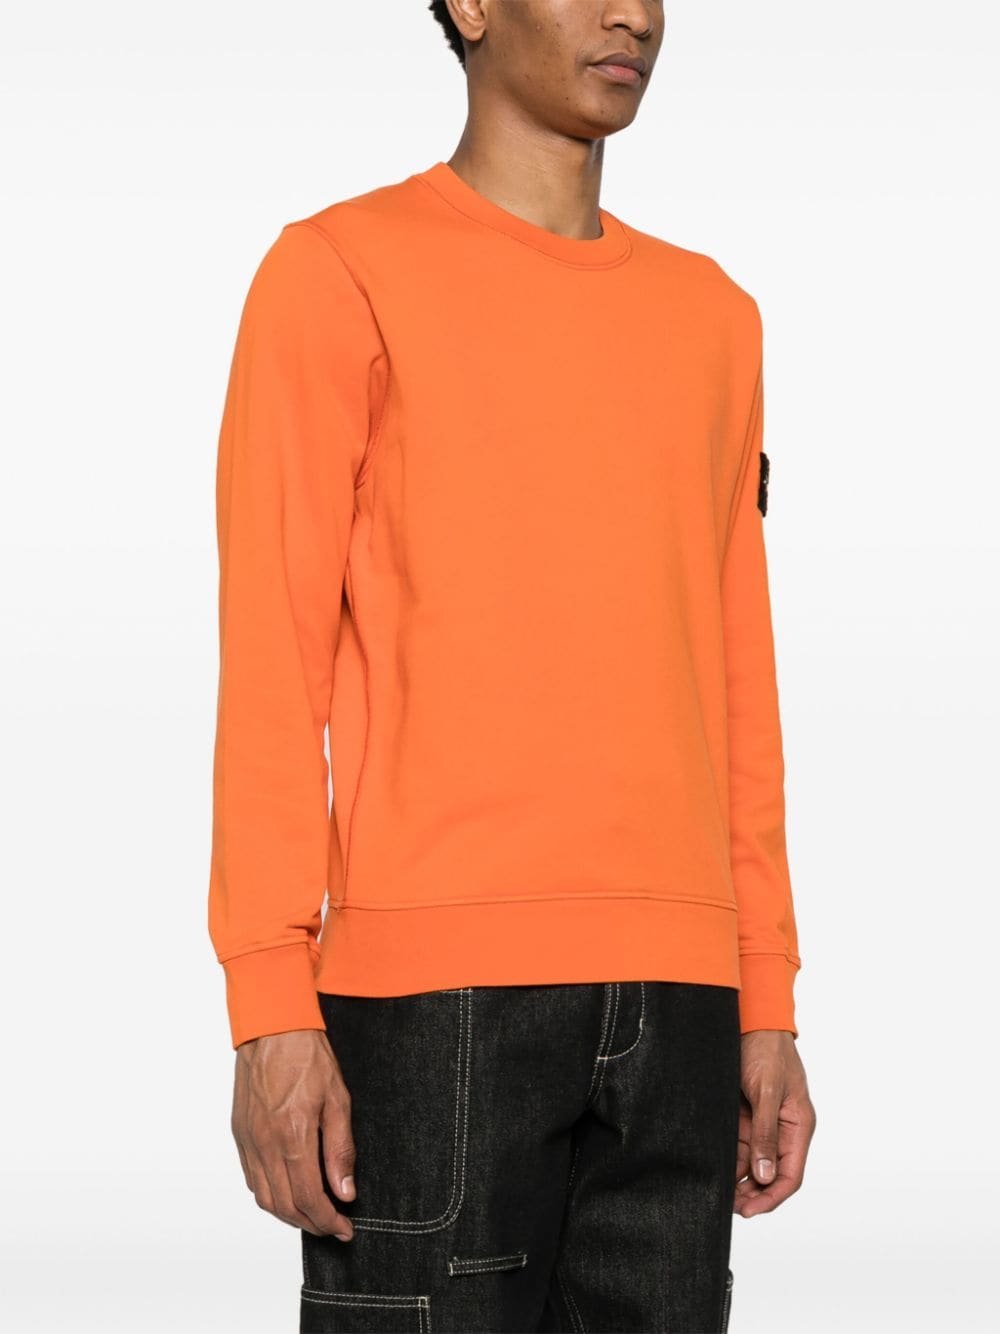 Orange Compass cotton sweatshirt